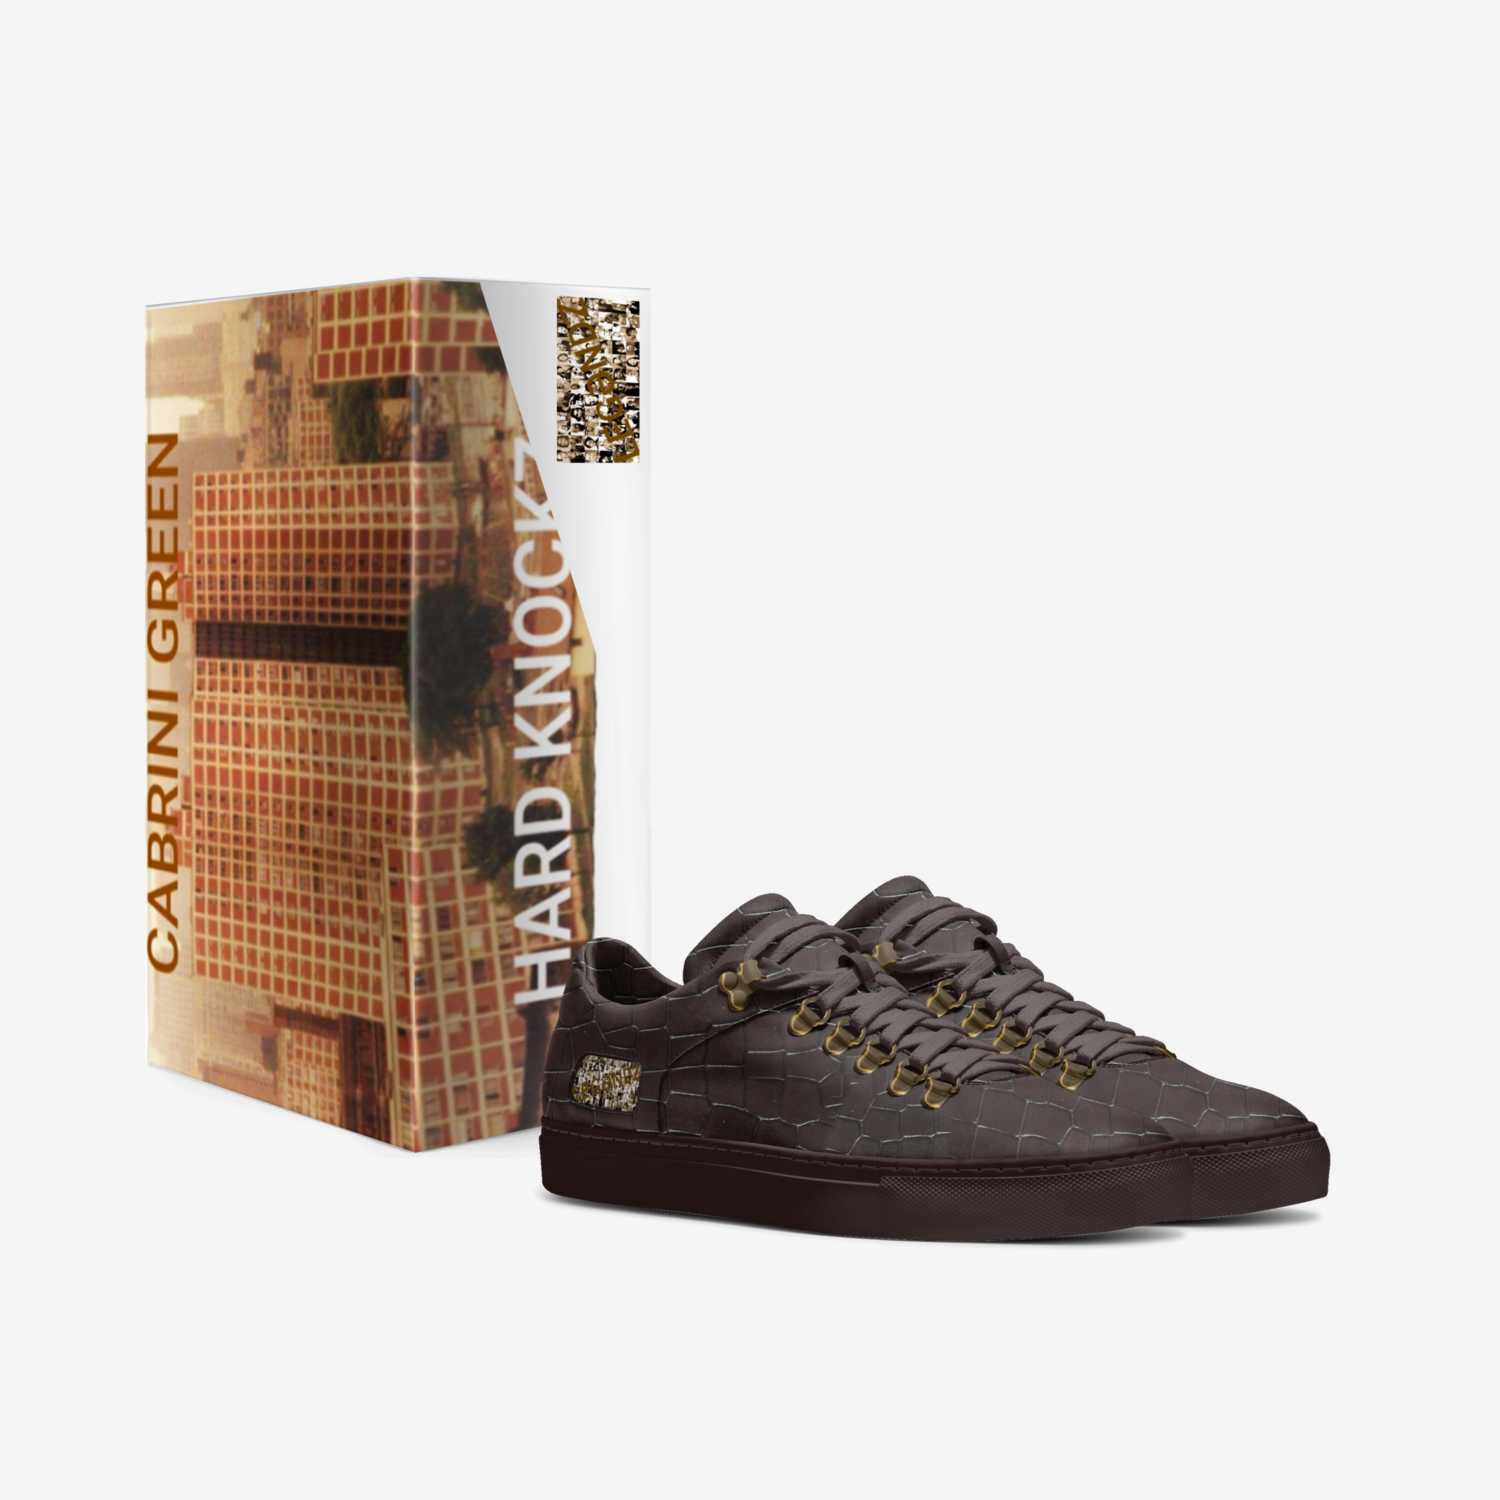 Hard KNOCKZ custom made in Italy shoes by Juju & Najm Toomey | Box view